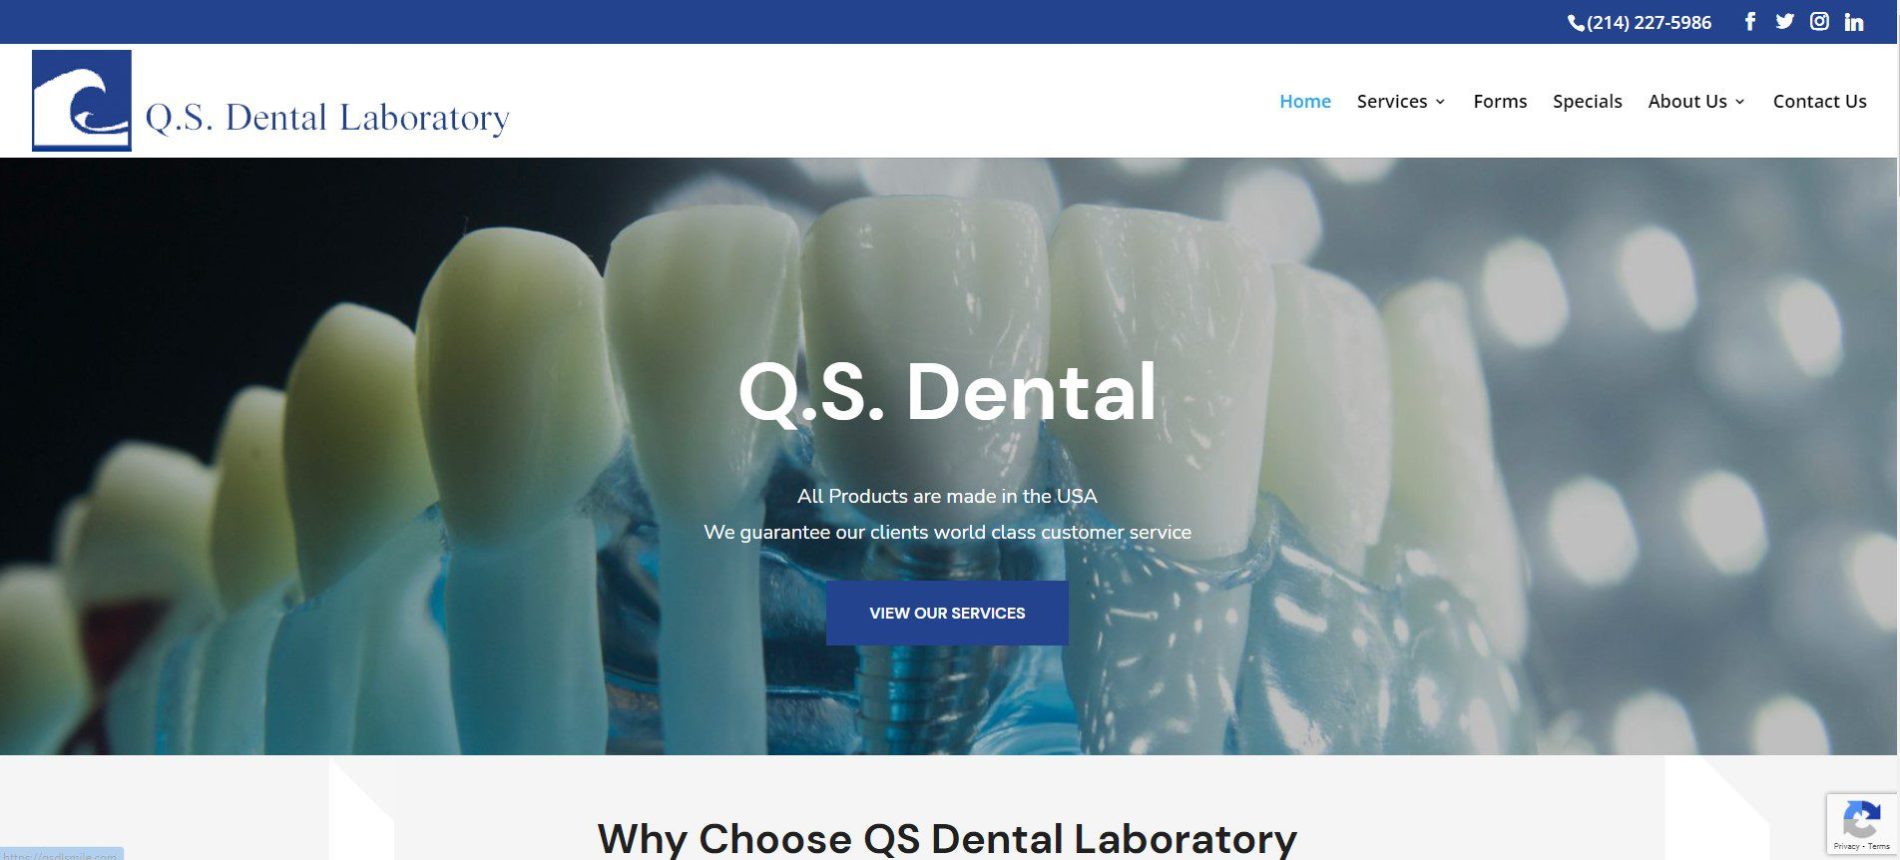 Q.S. Dental Laboratory